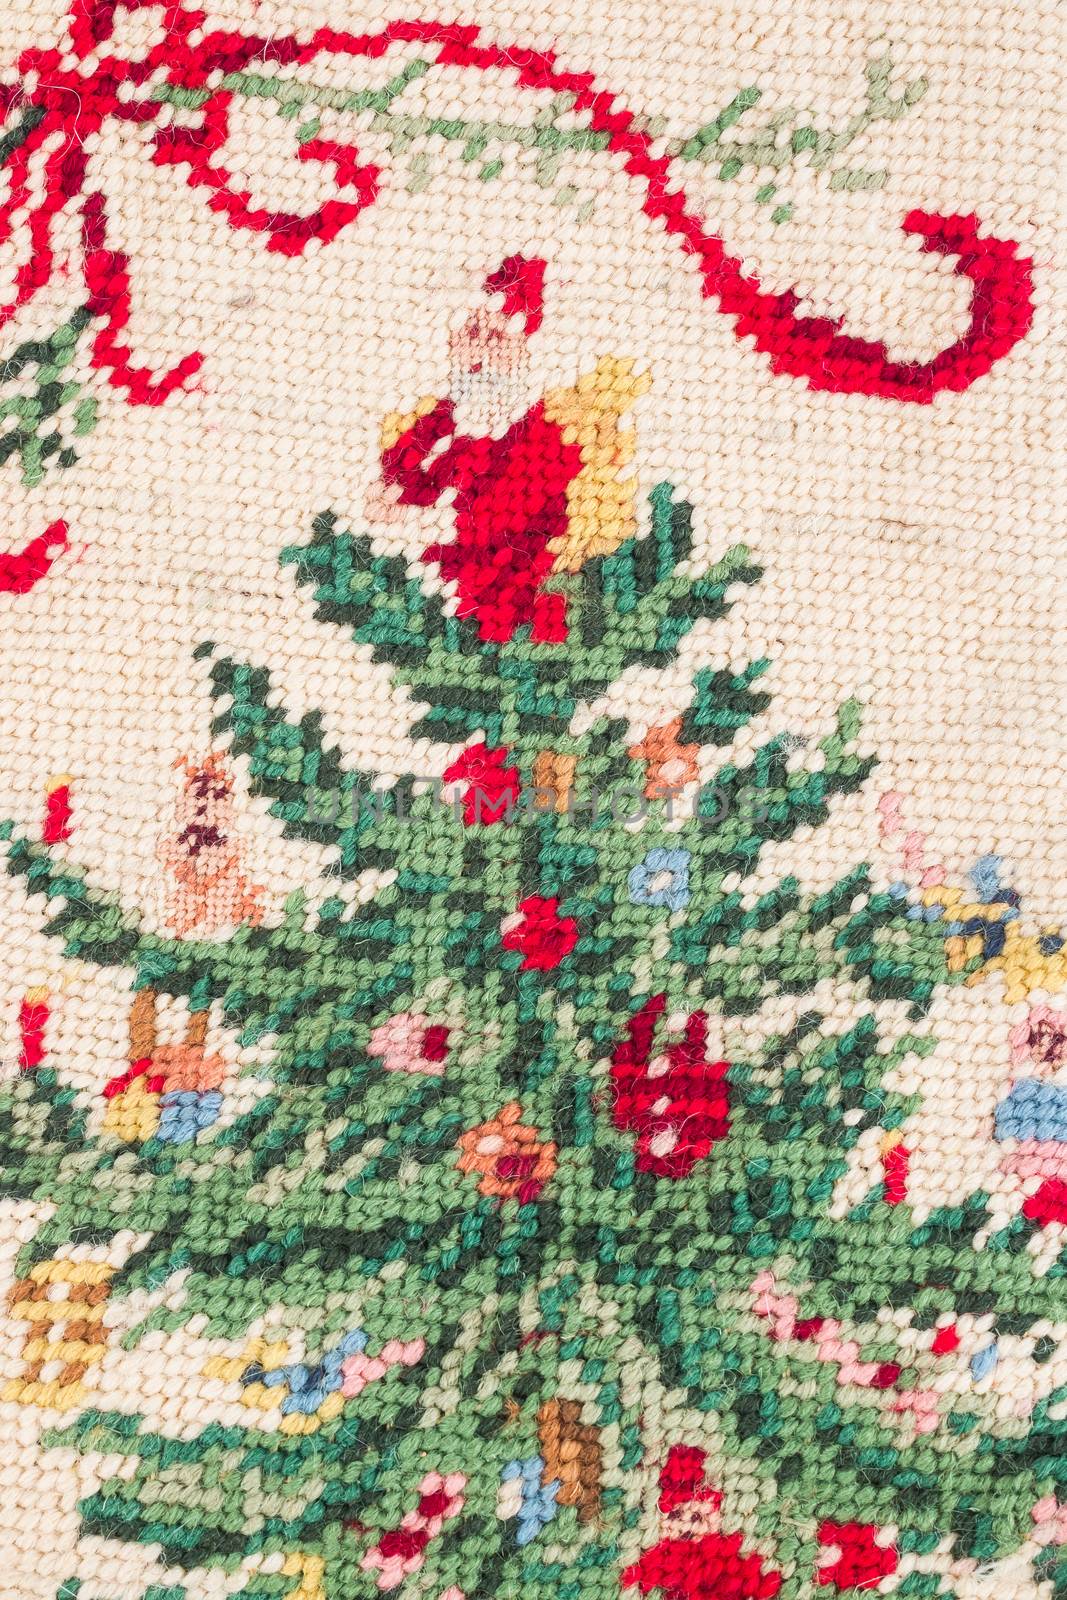 Christmas cross stitch by simpleBE